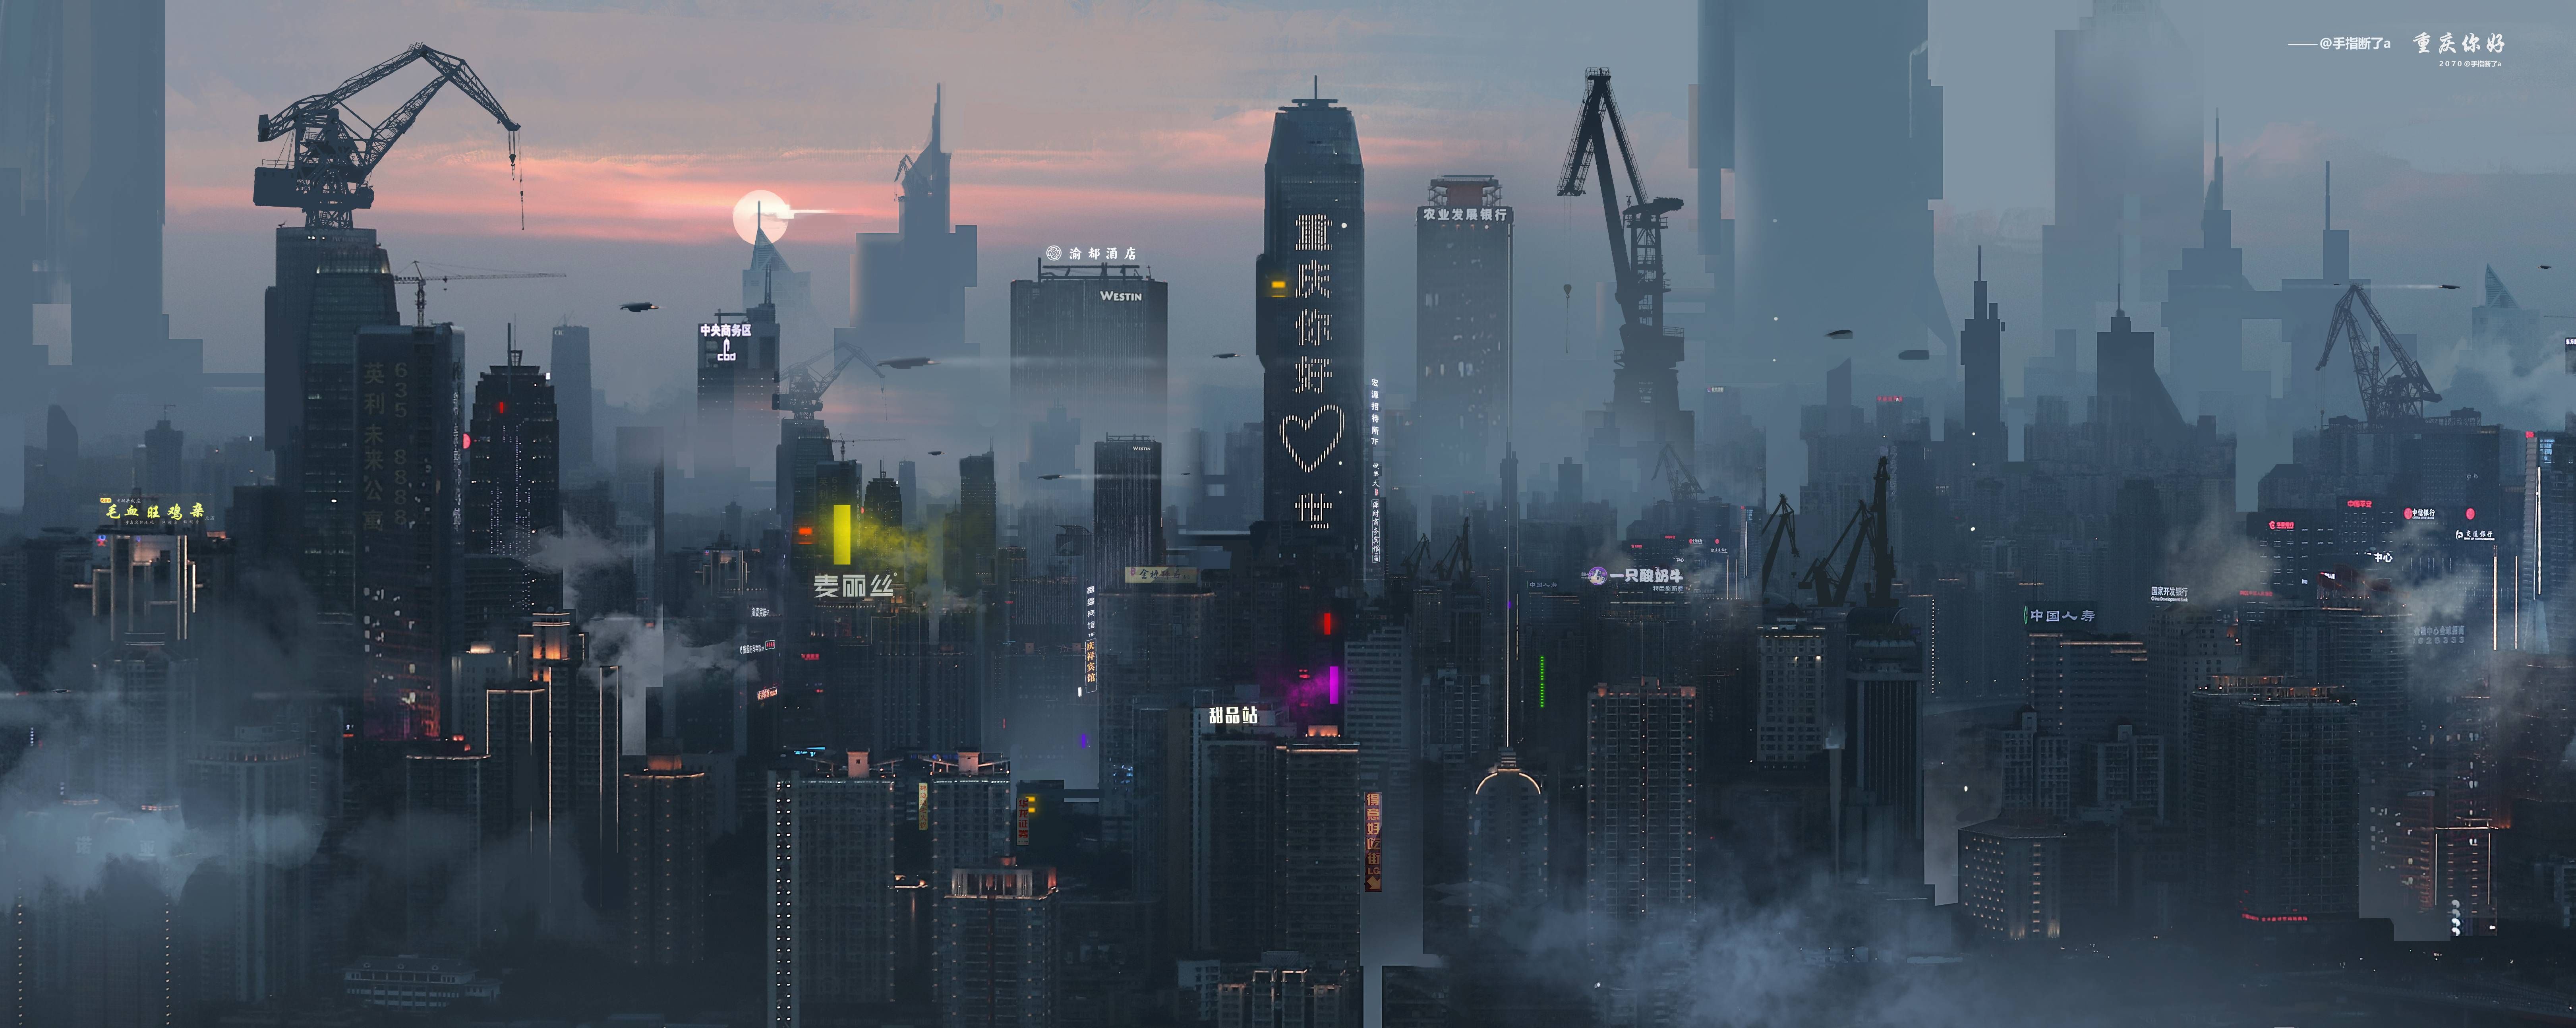 Hello, Chongqing!. Cyberpunk city, Skyline, Background image